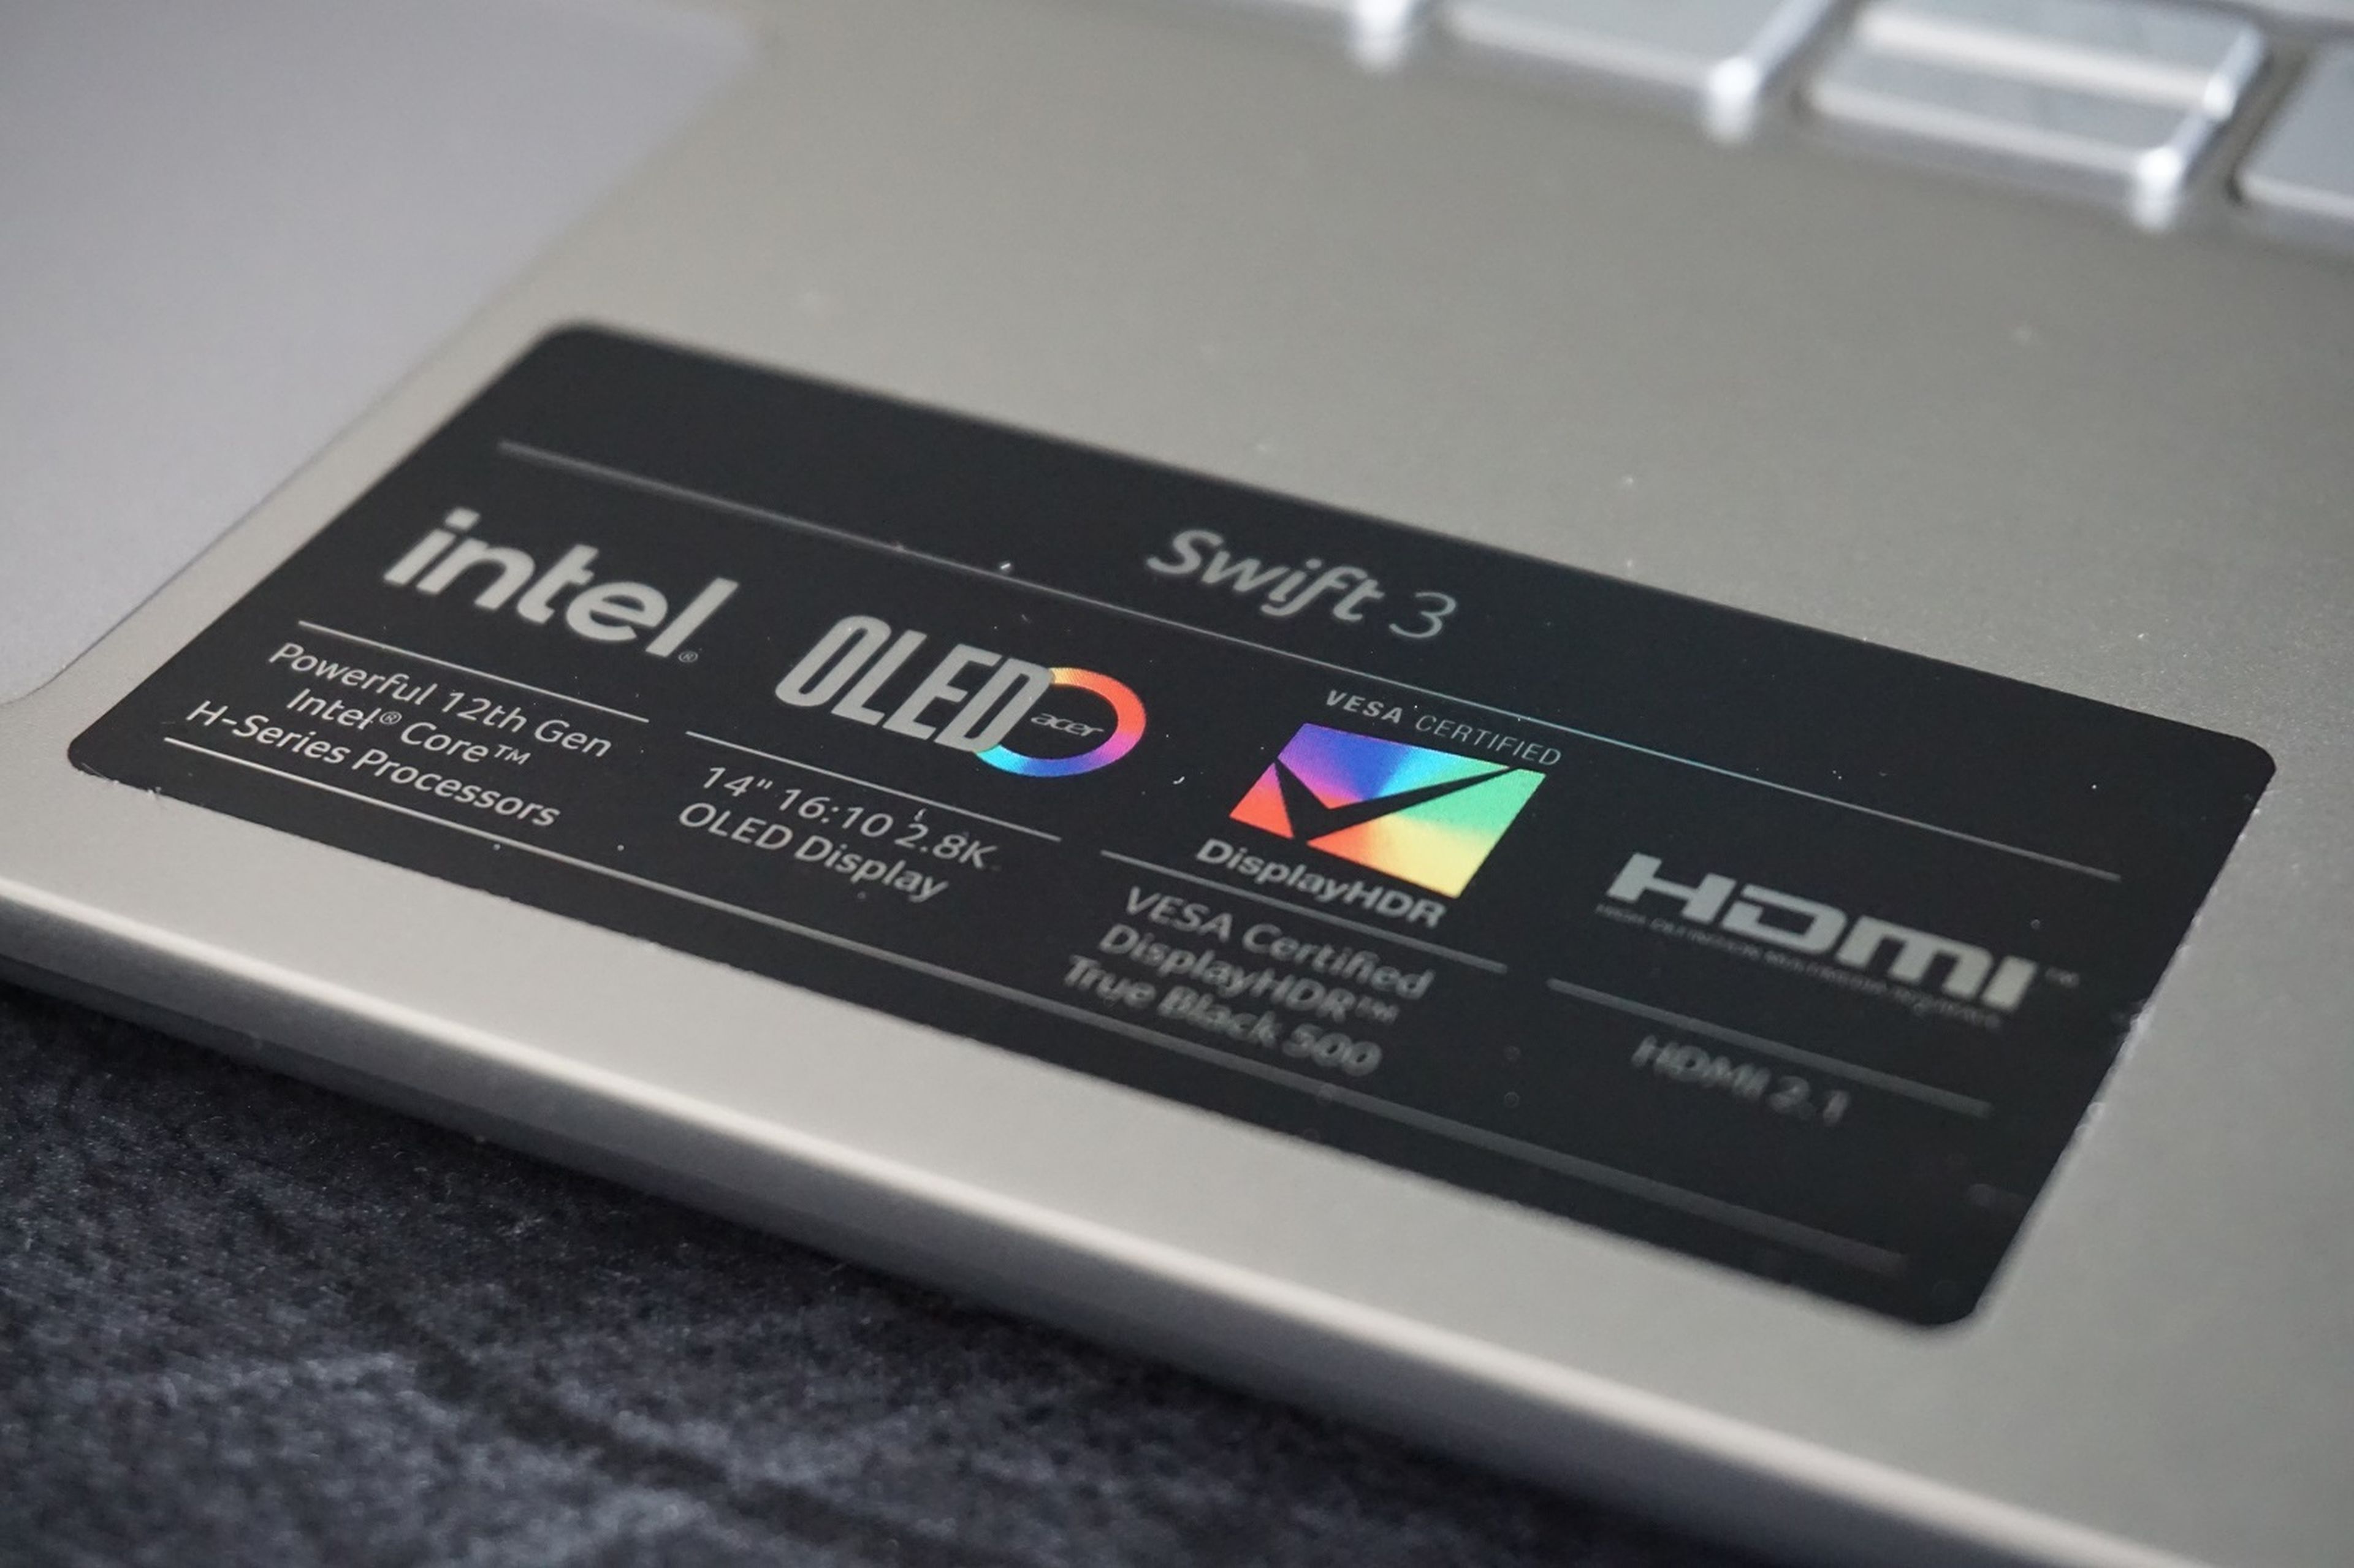 Acer Swift 3 OLED